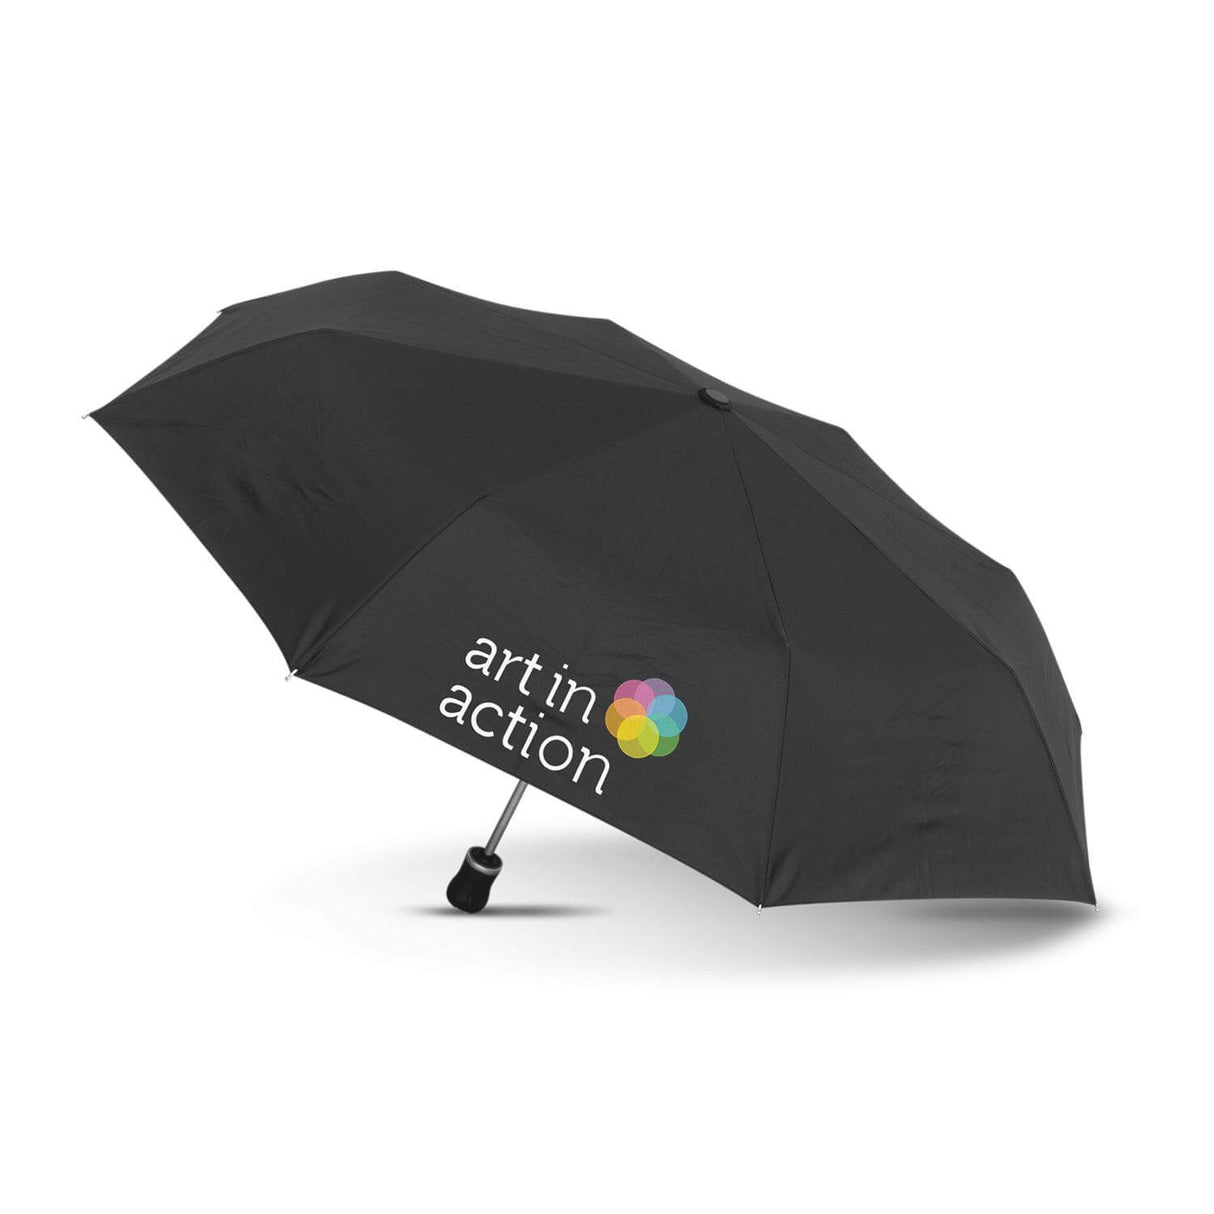 Sheraton Compact Umbrella - Printed